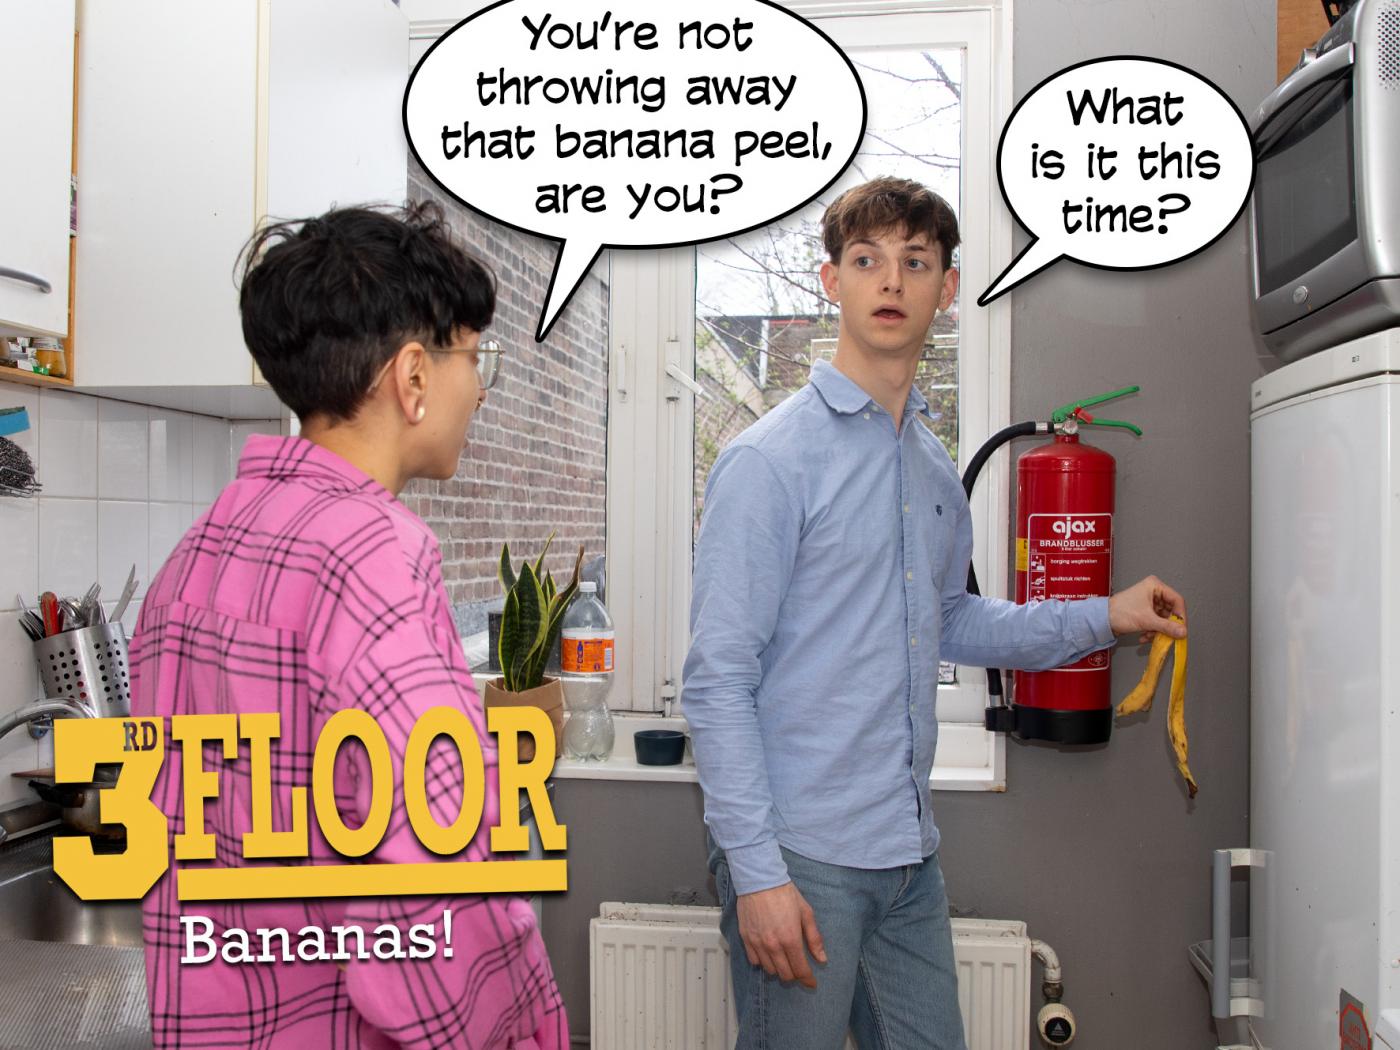 3rd Floor: Bananas!